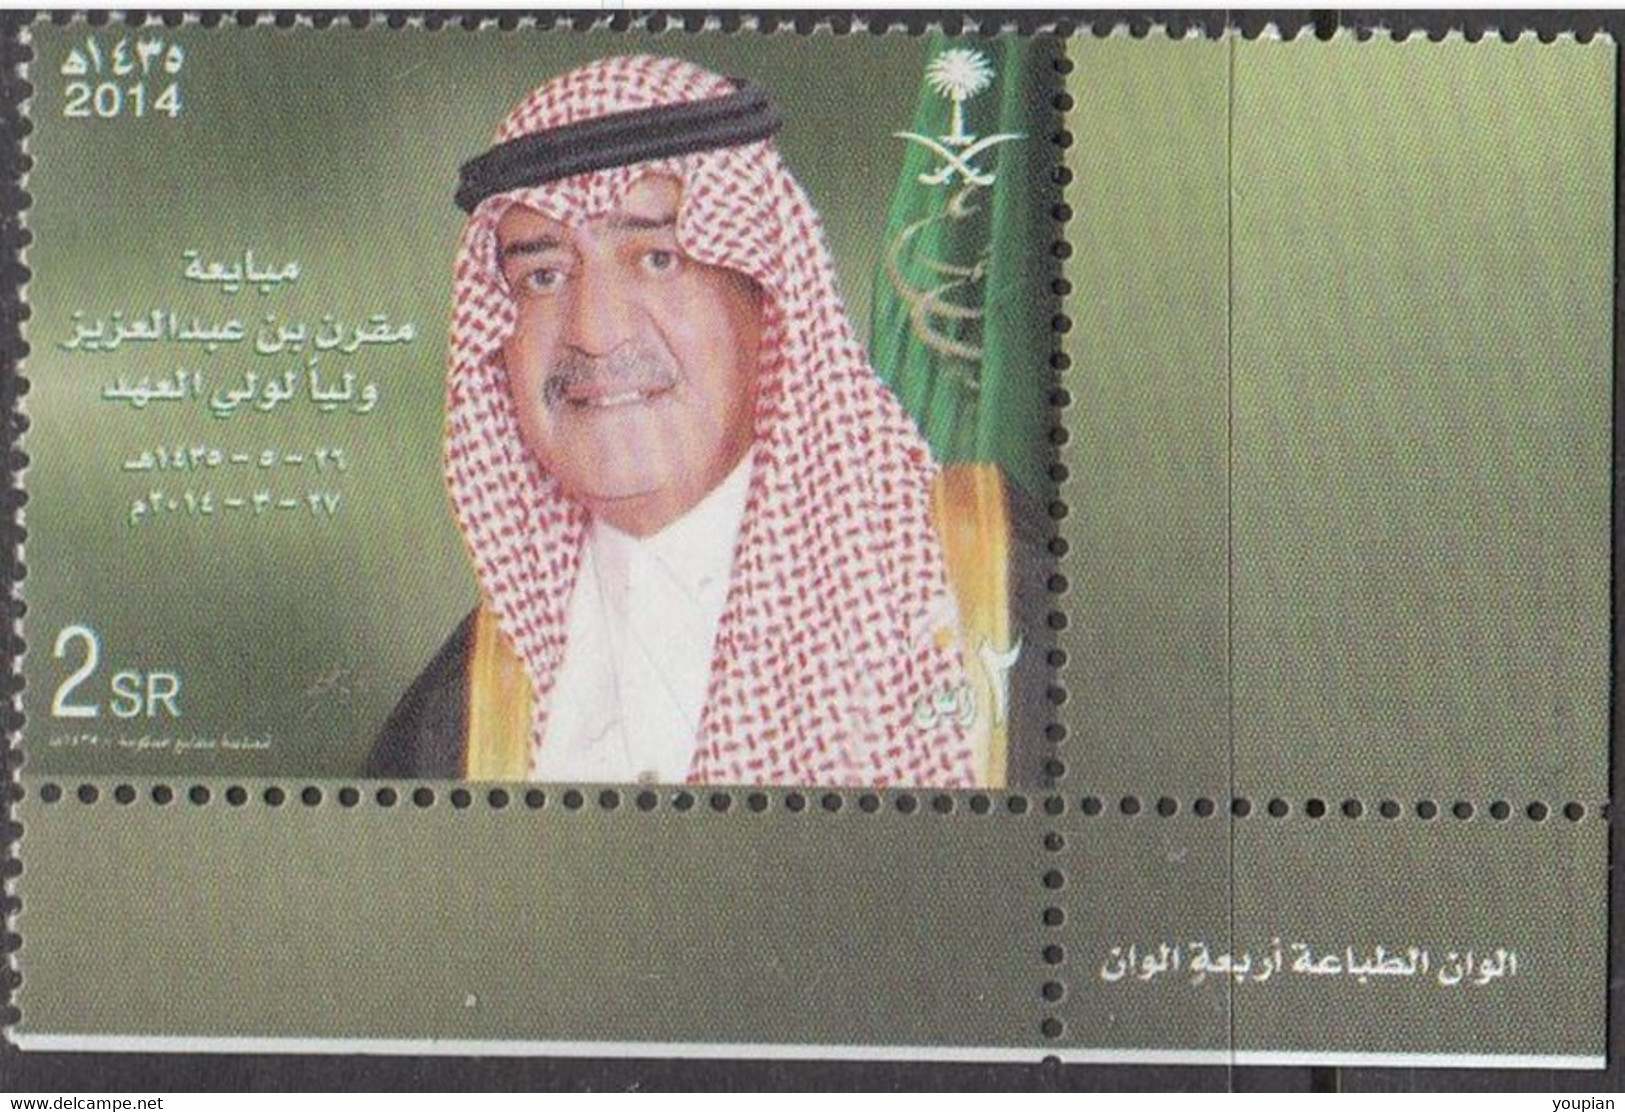 Saudi Arabia 2014, Nomination Of Ibn Abd Al-Aziz As A Crown Prince, MNH Single Stamp - Arabia Saudita